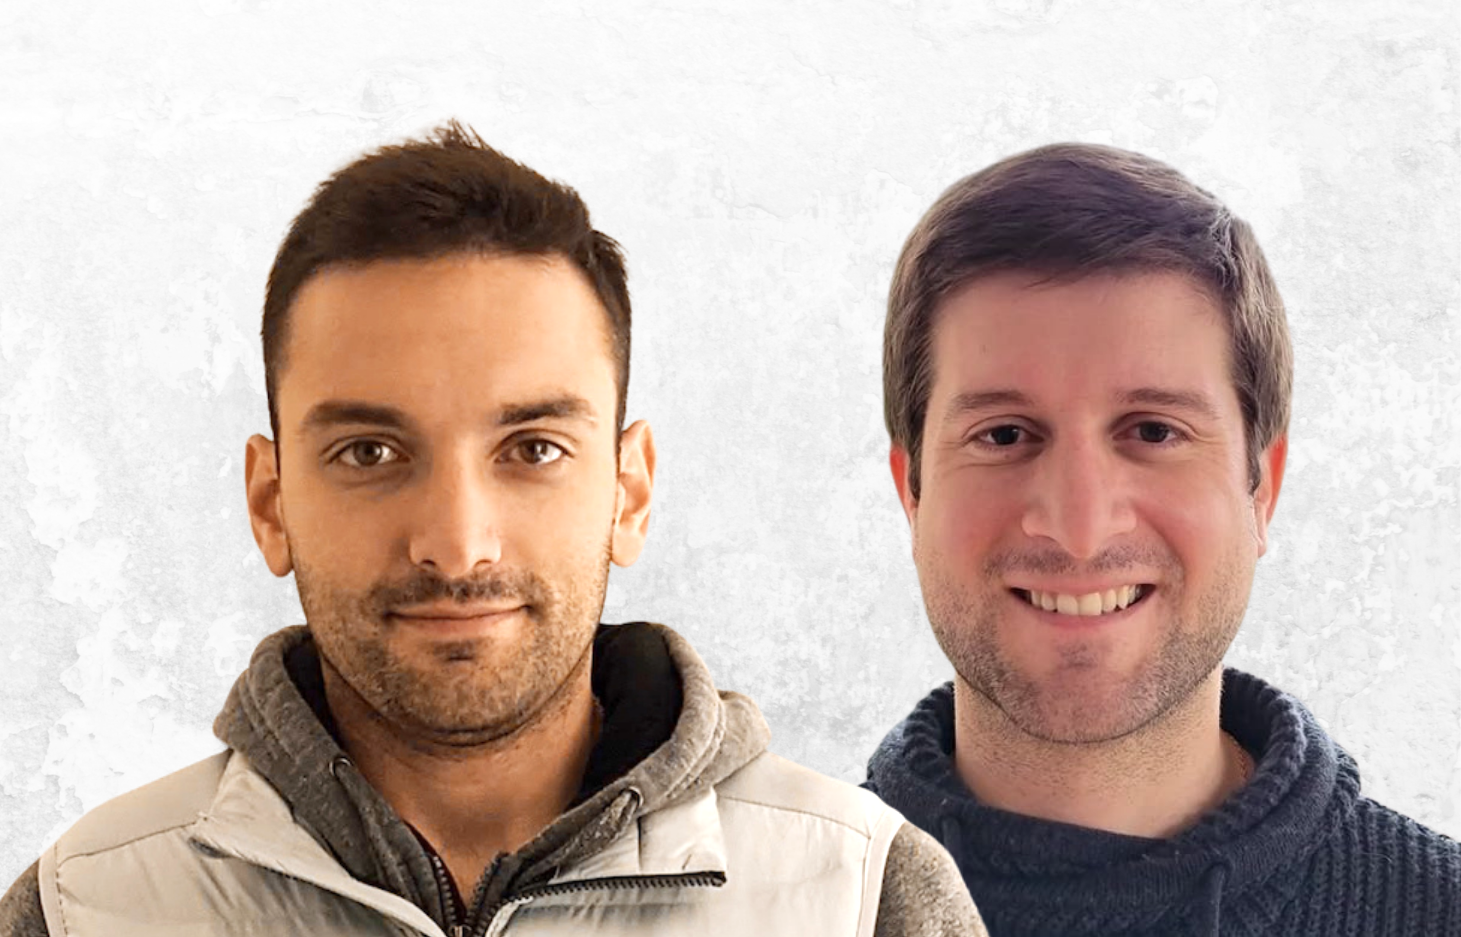 Andes STR co-founders Sebastian Rivas and Matias Duhart